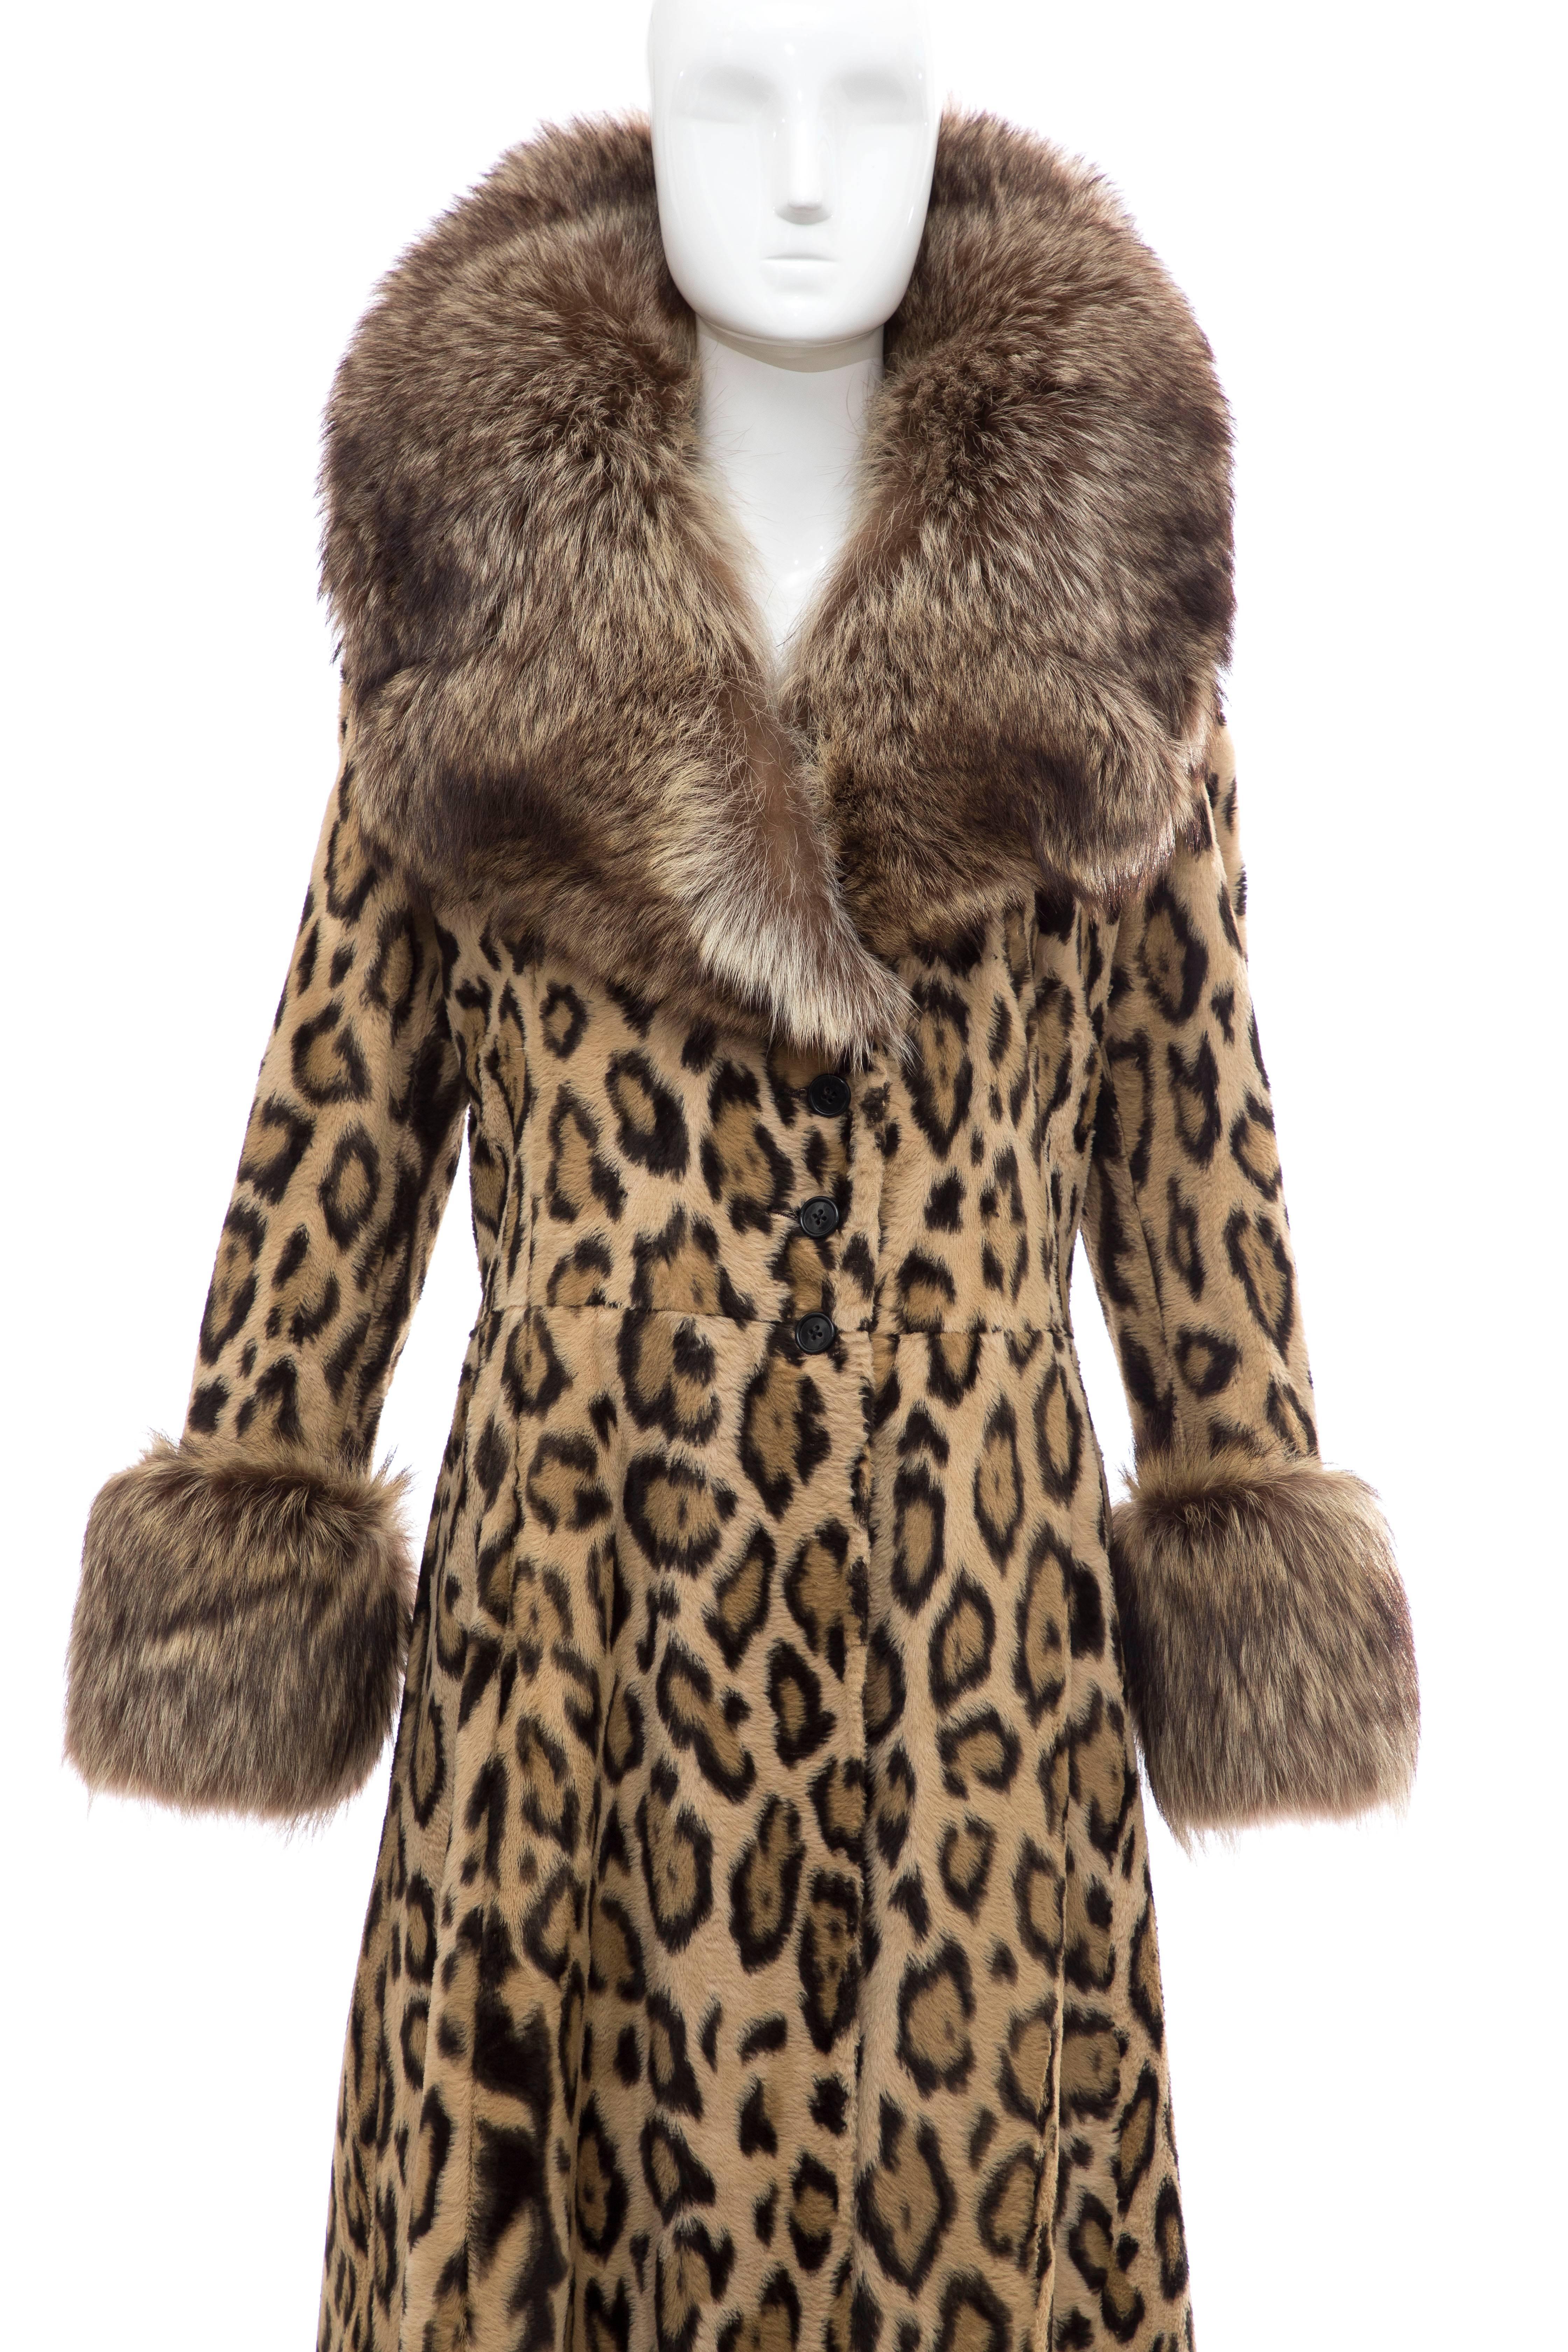 Women's Goldring's Couture Faux Leopard Coat Dramatic Fur Collar & Cuffs, Circa: 1970's